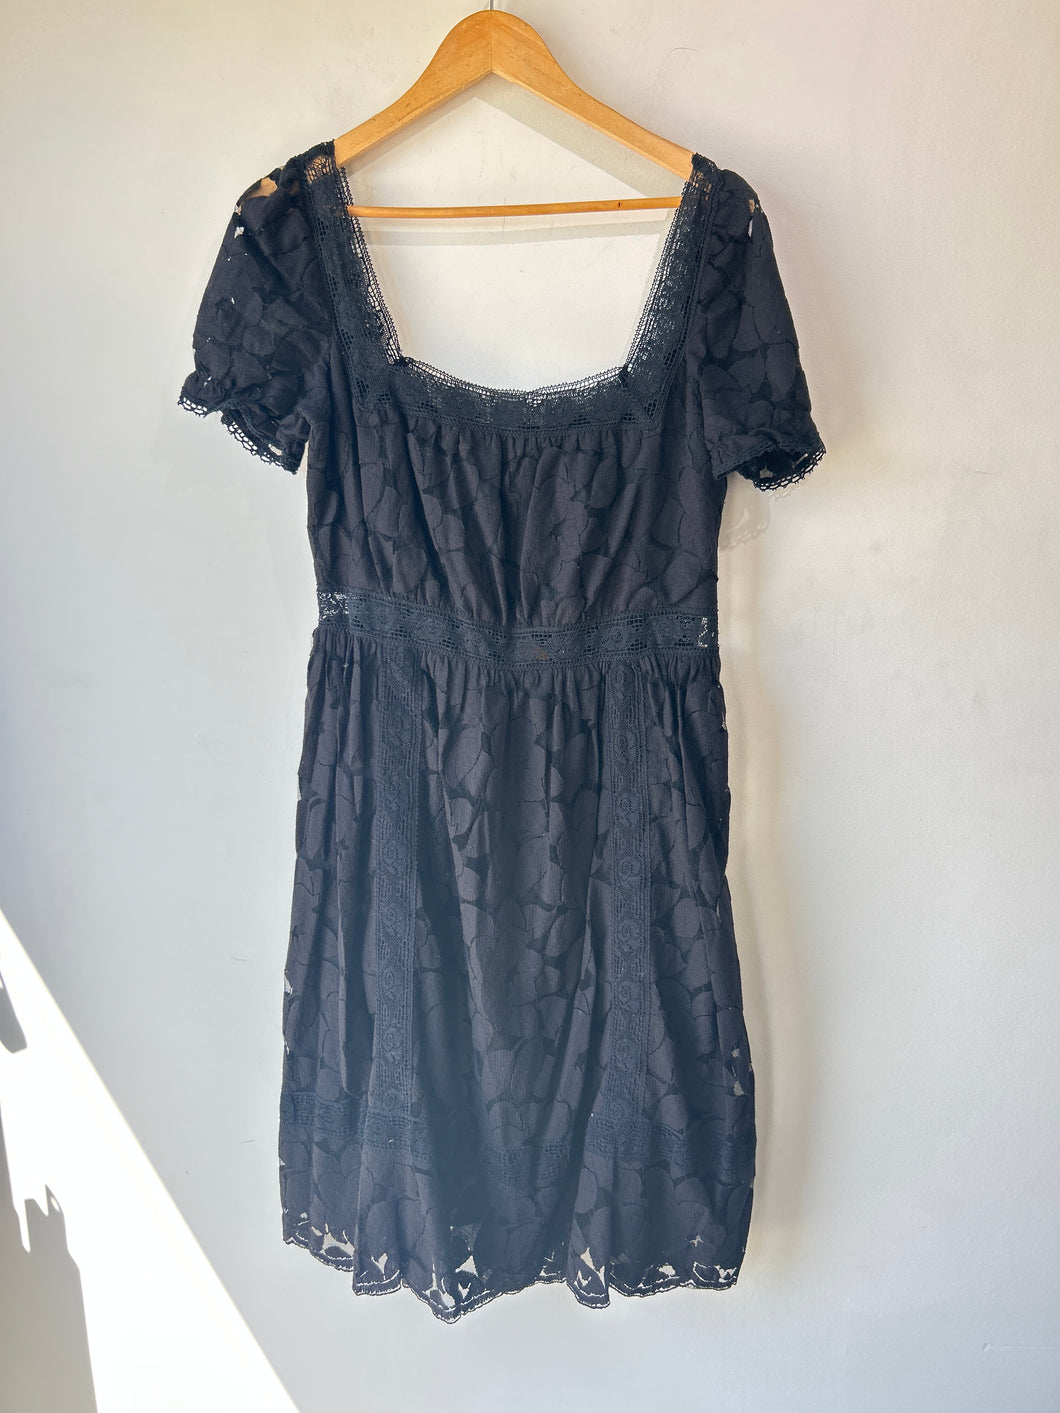 Anna Sui Black Lace Dress